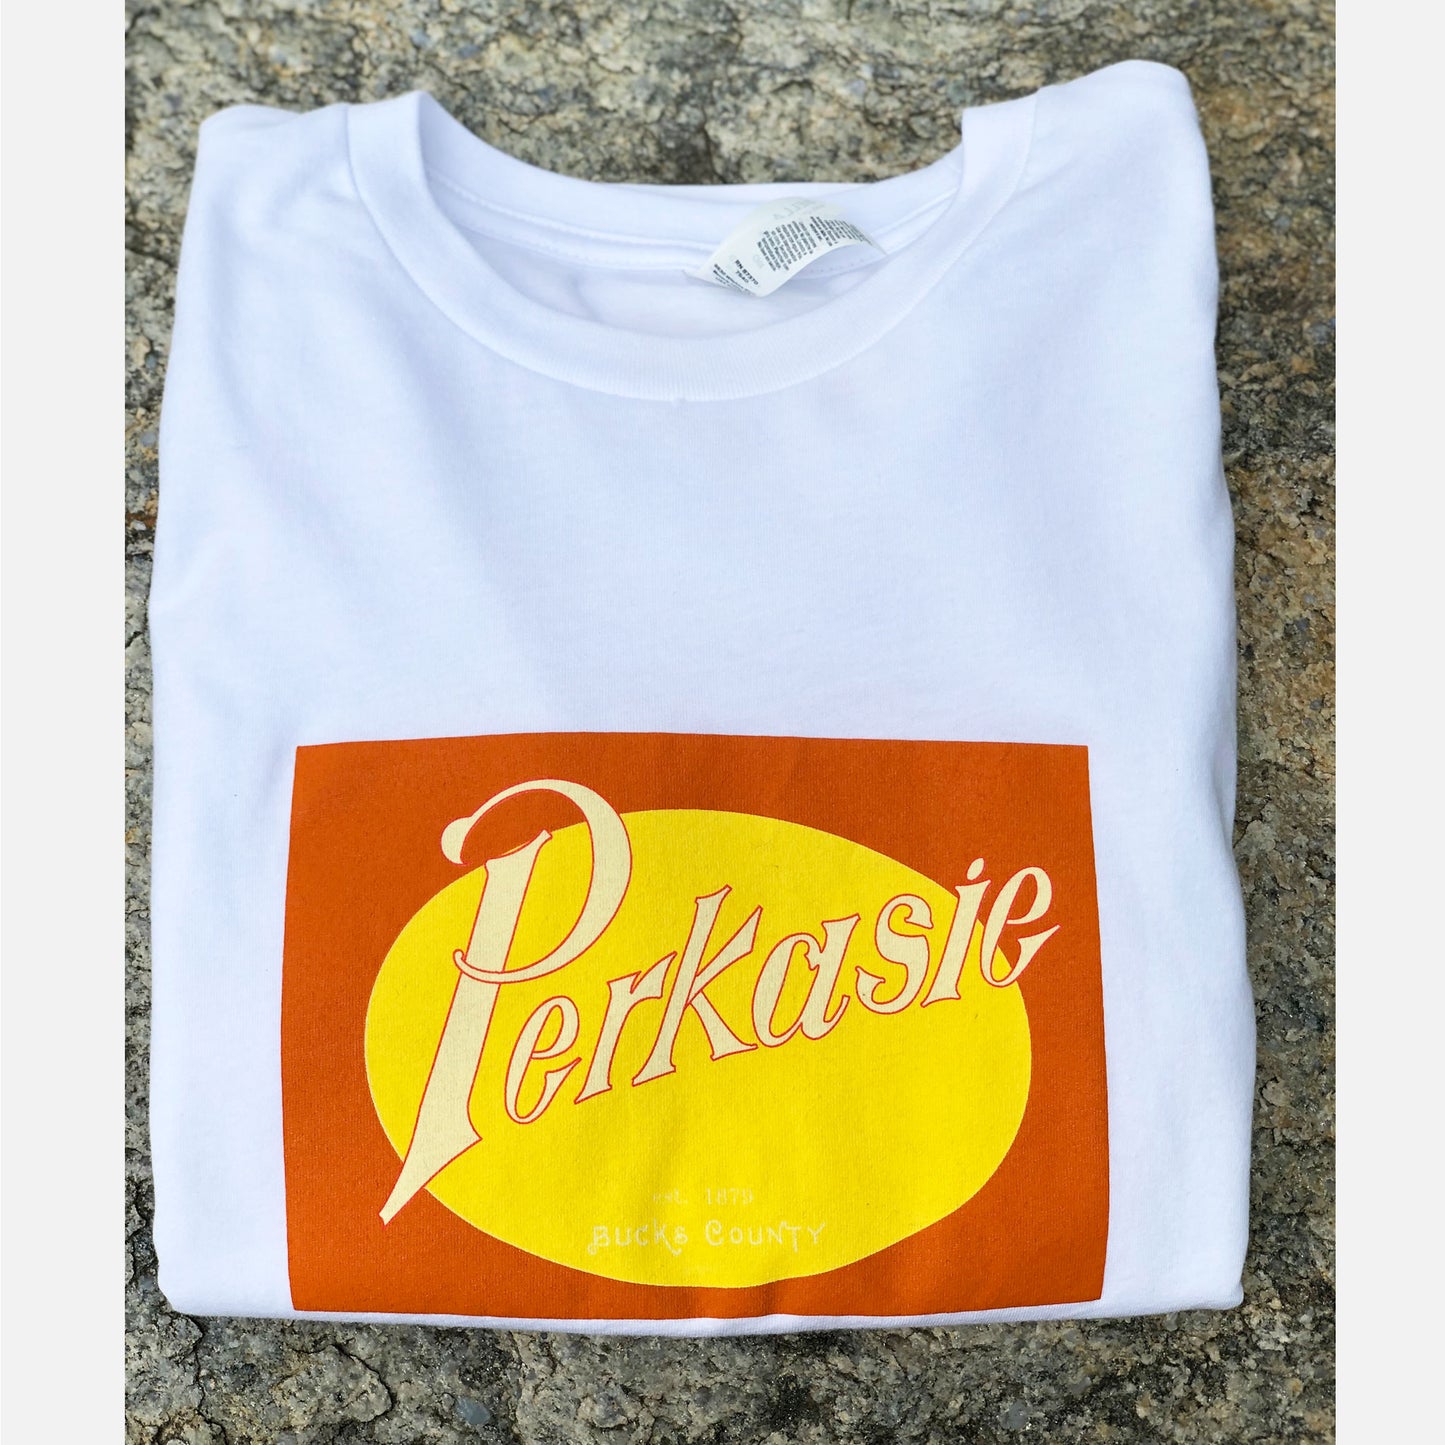 Perkasie graphic T-shirt